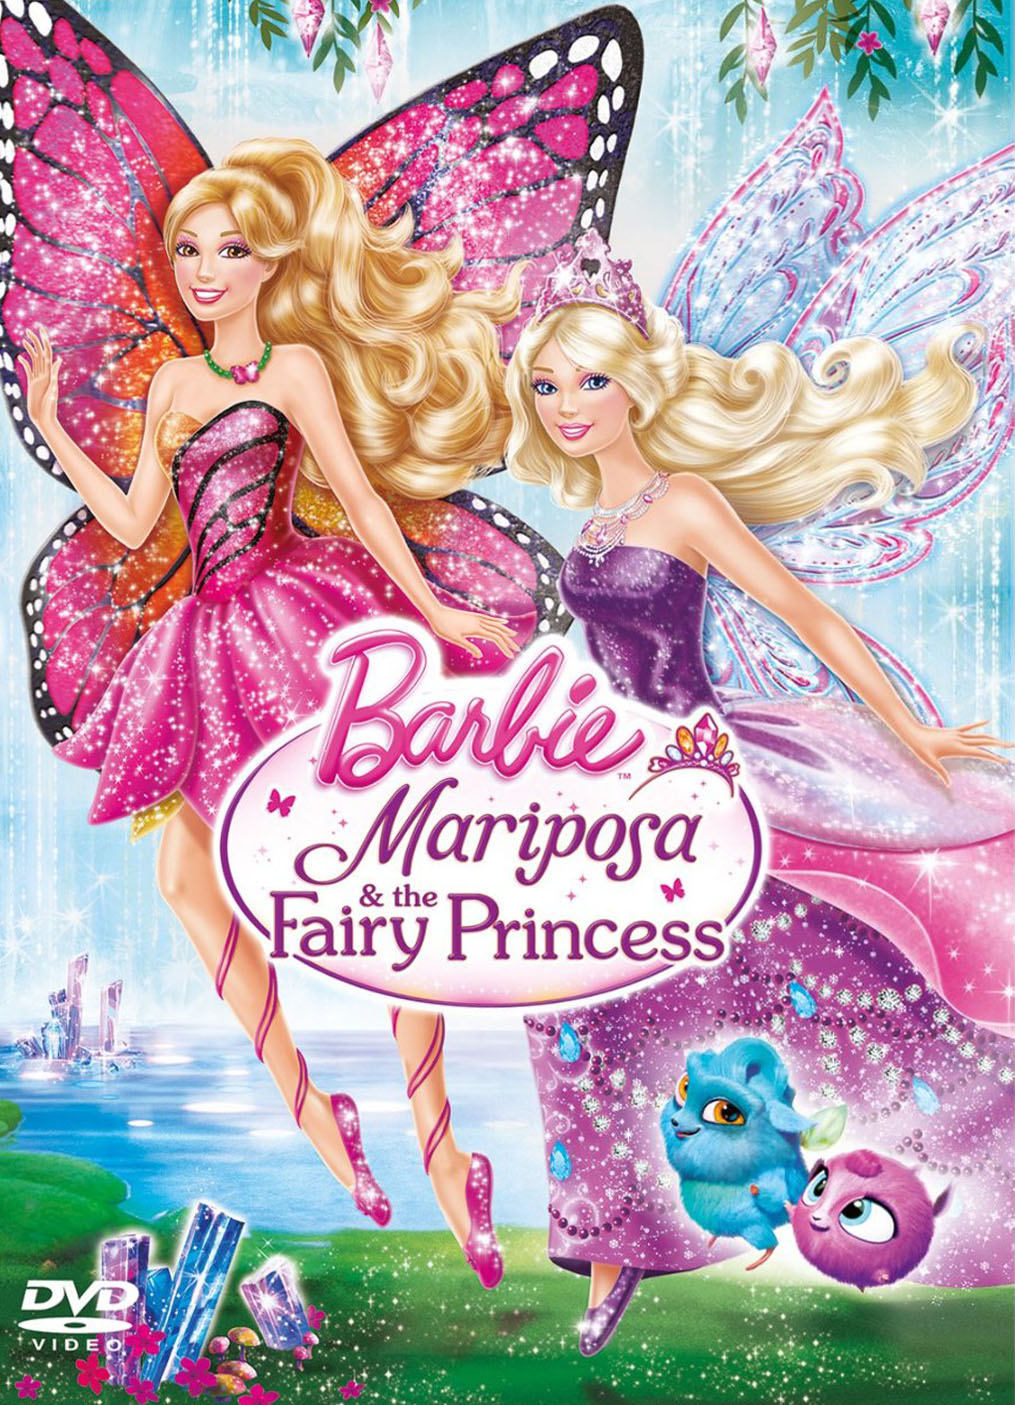 Barbie-Mariposa-2-DVD-Cover.jpg